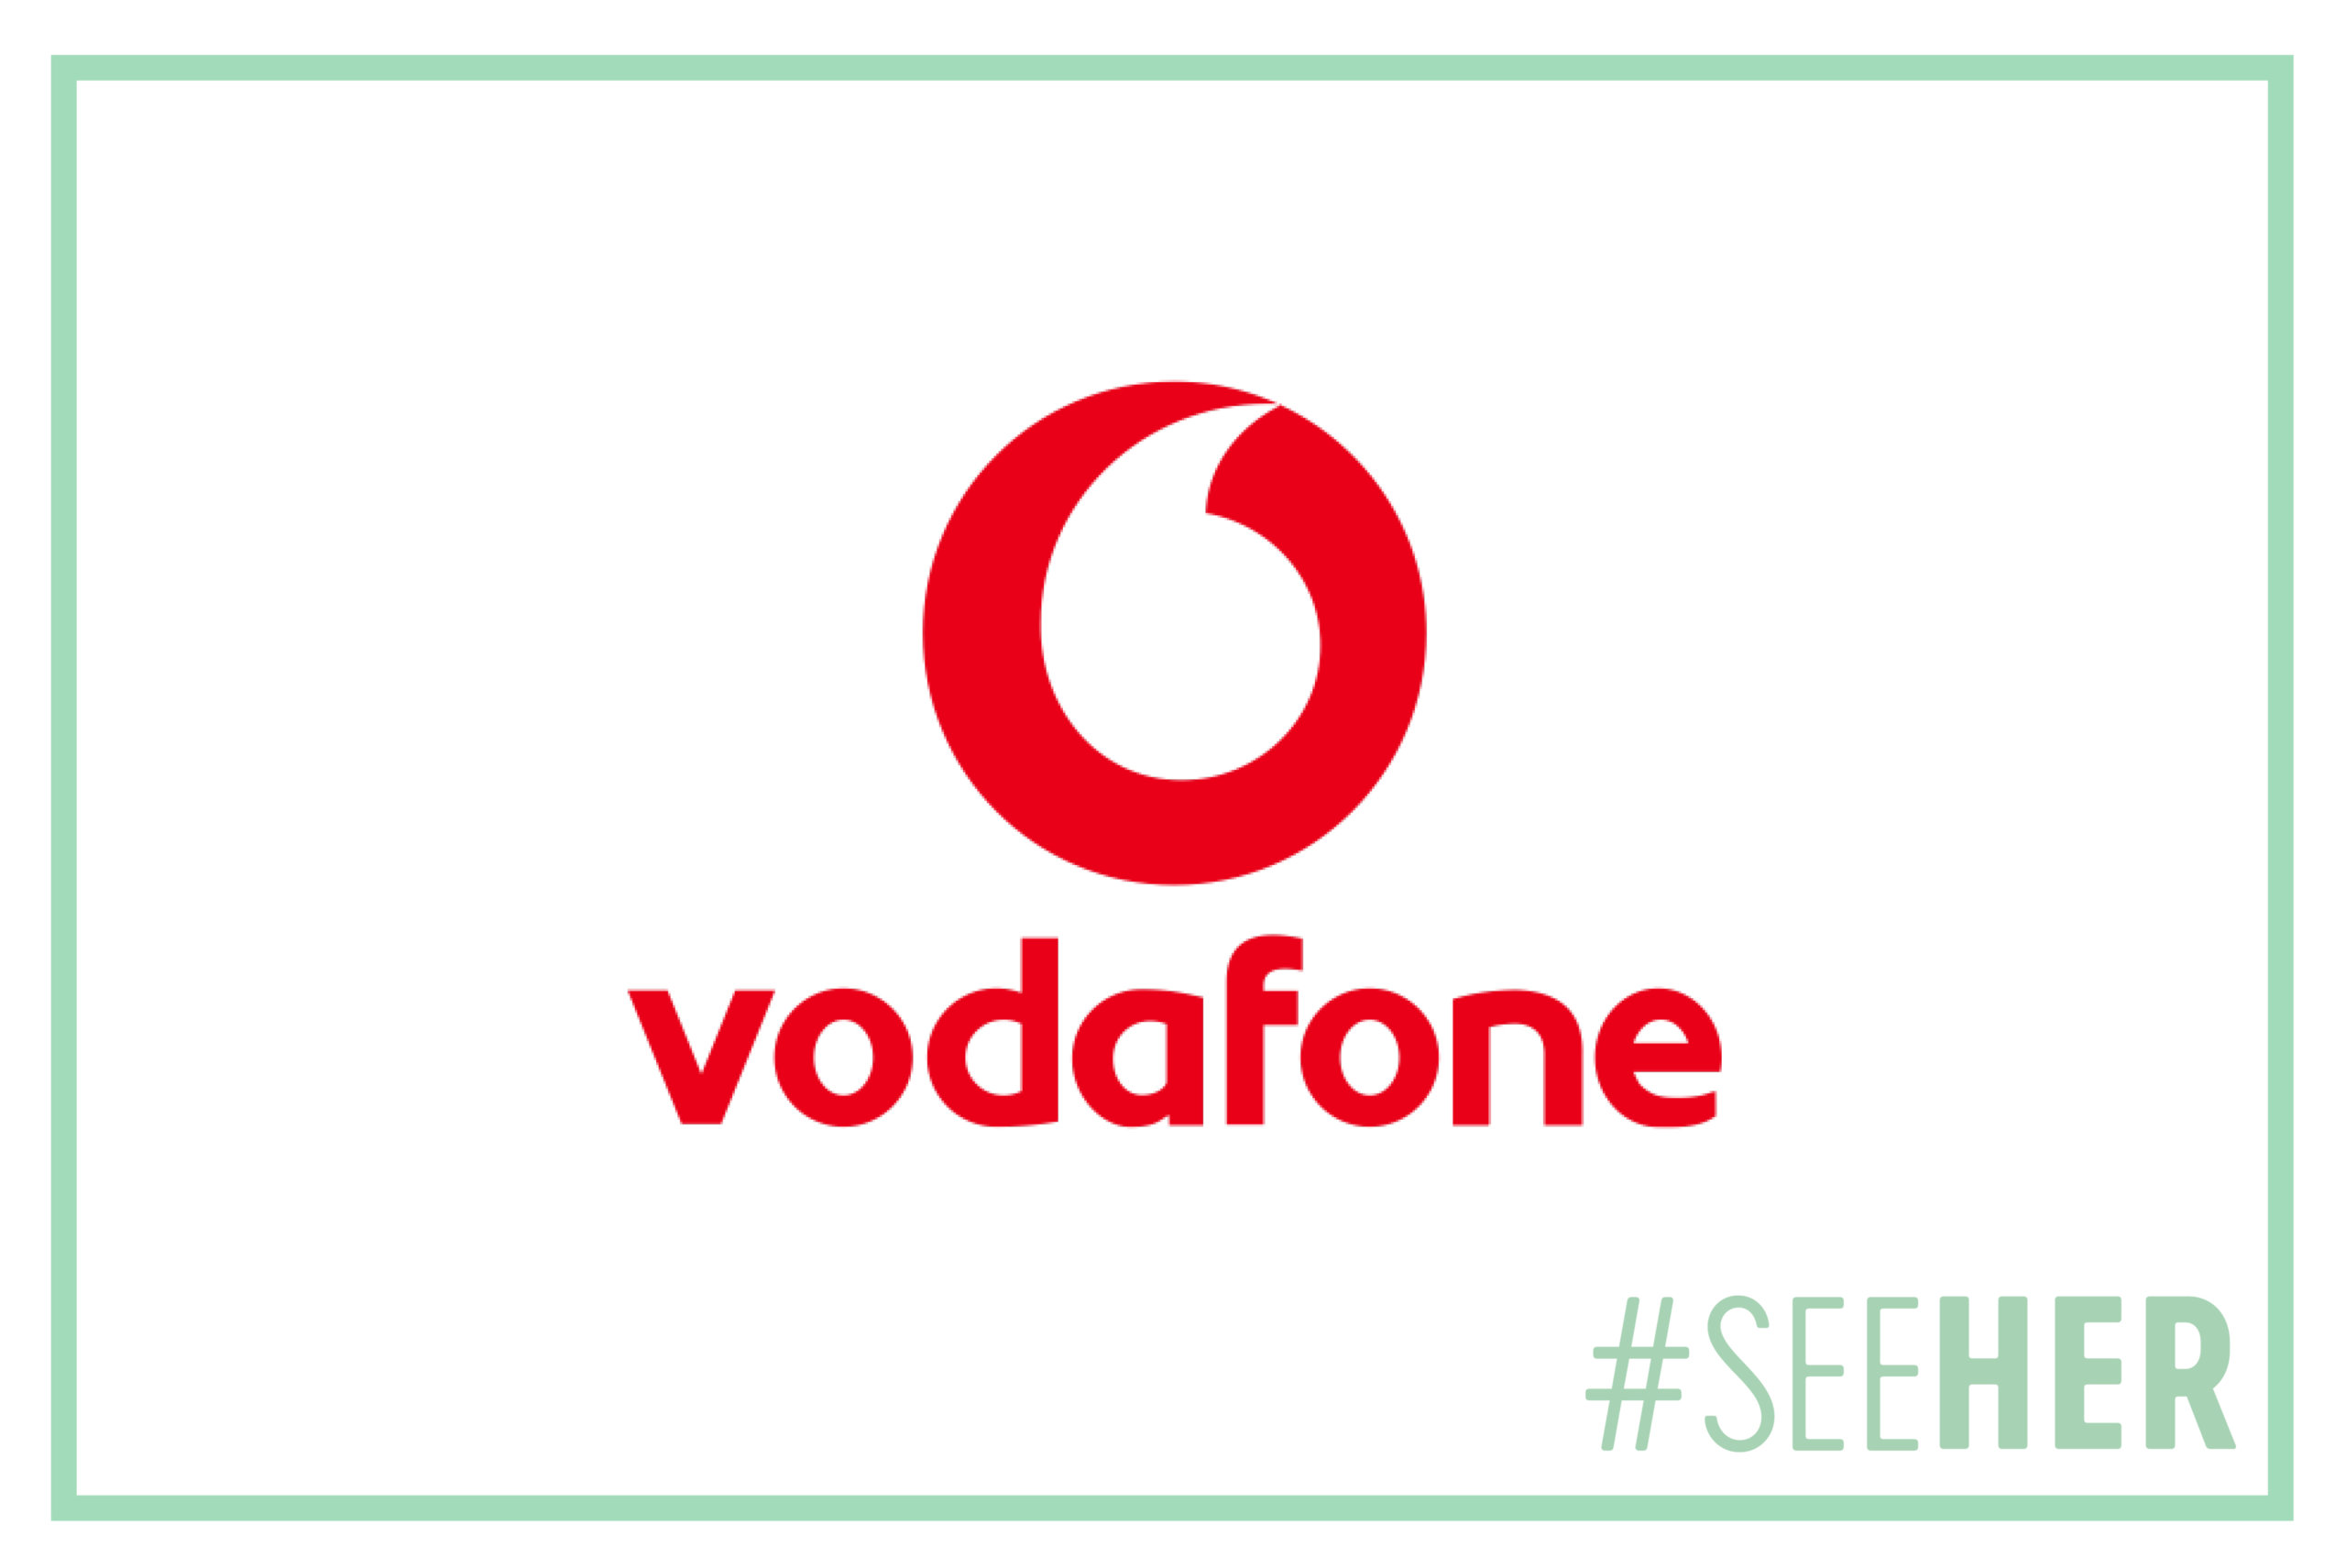 Vodafone joins SeeHer